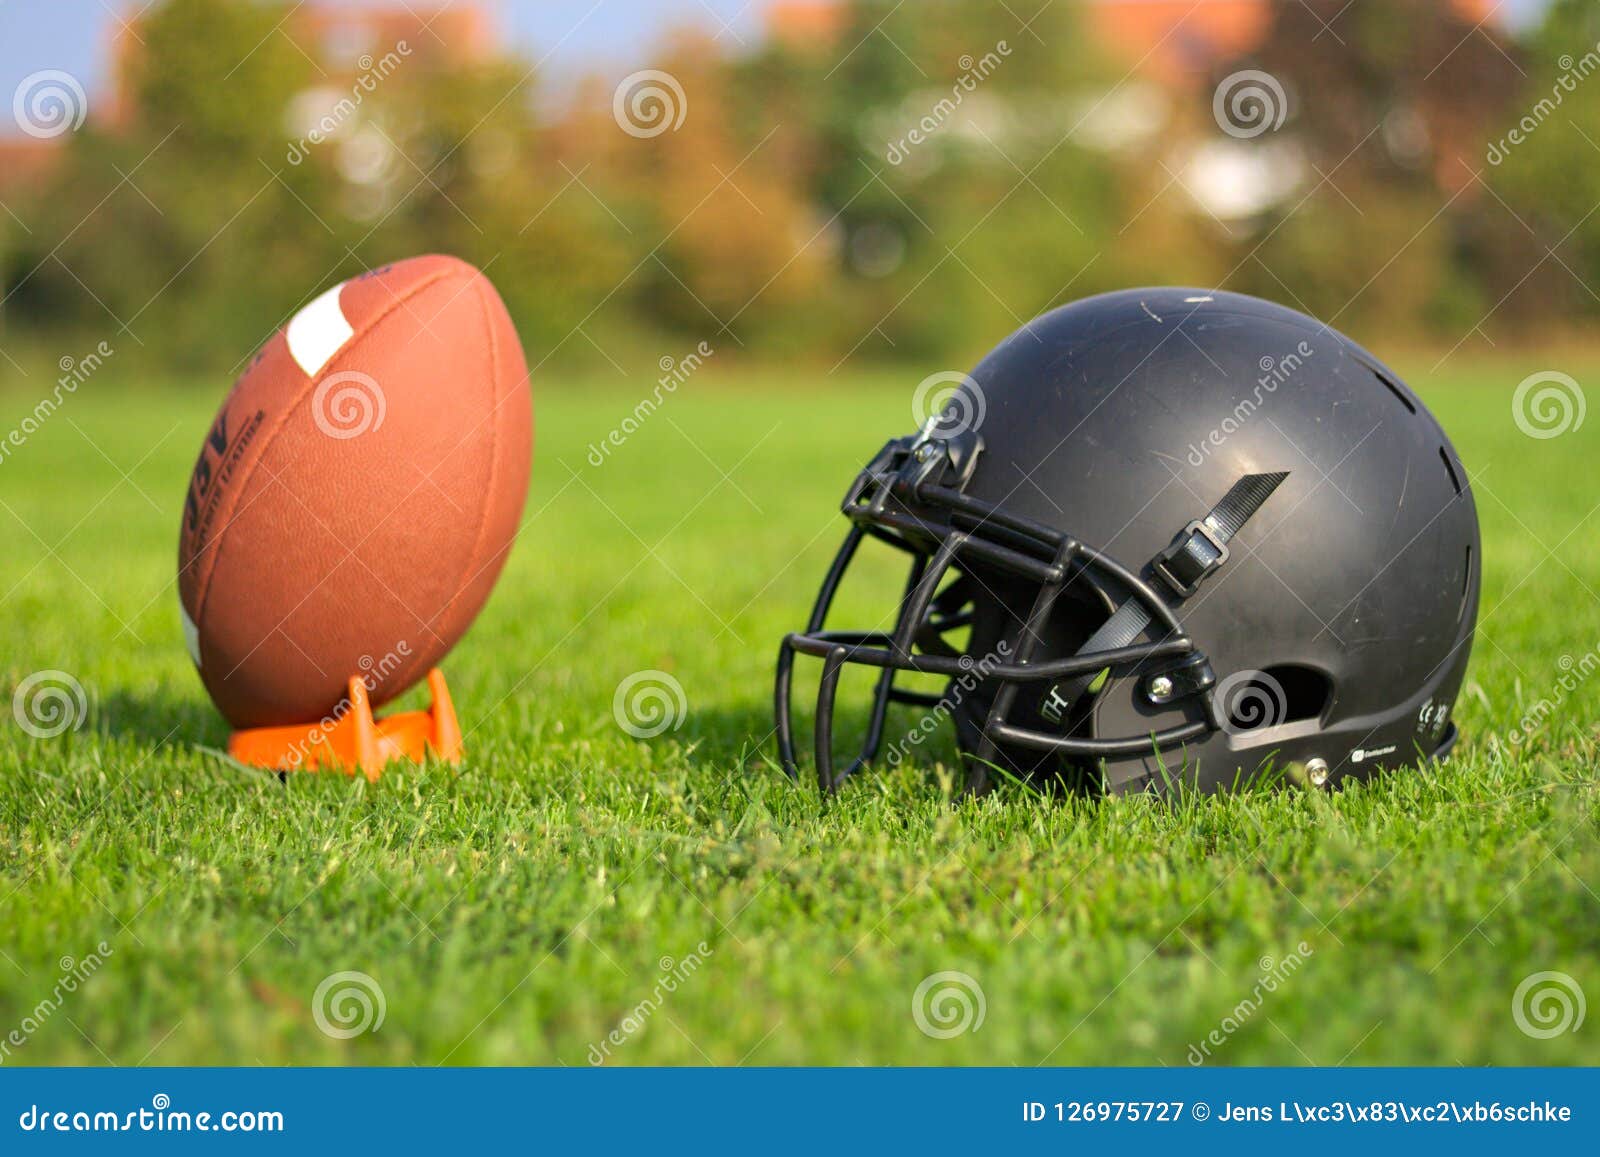 American Football Equipment Used Stock Image - Image of ball, team